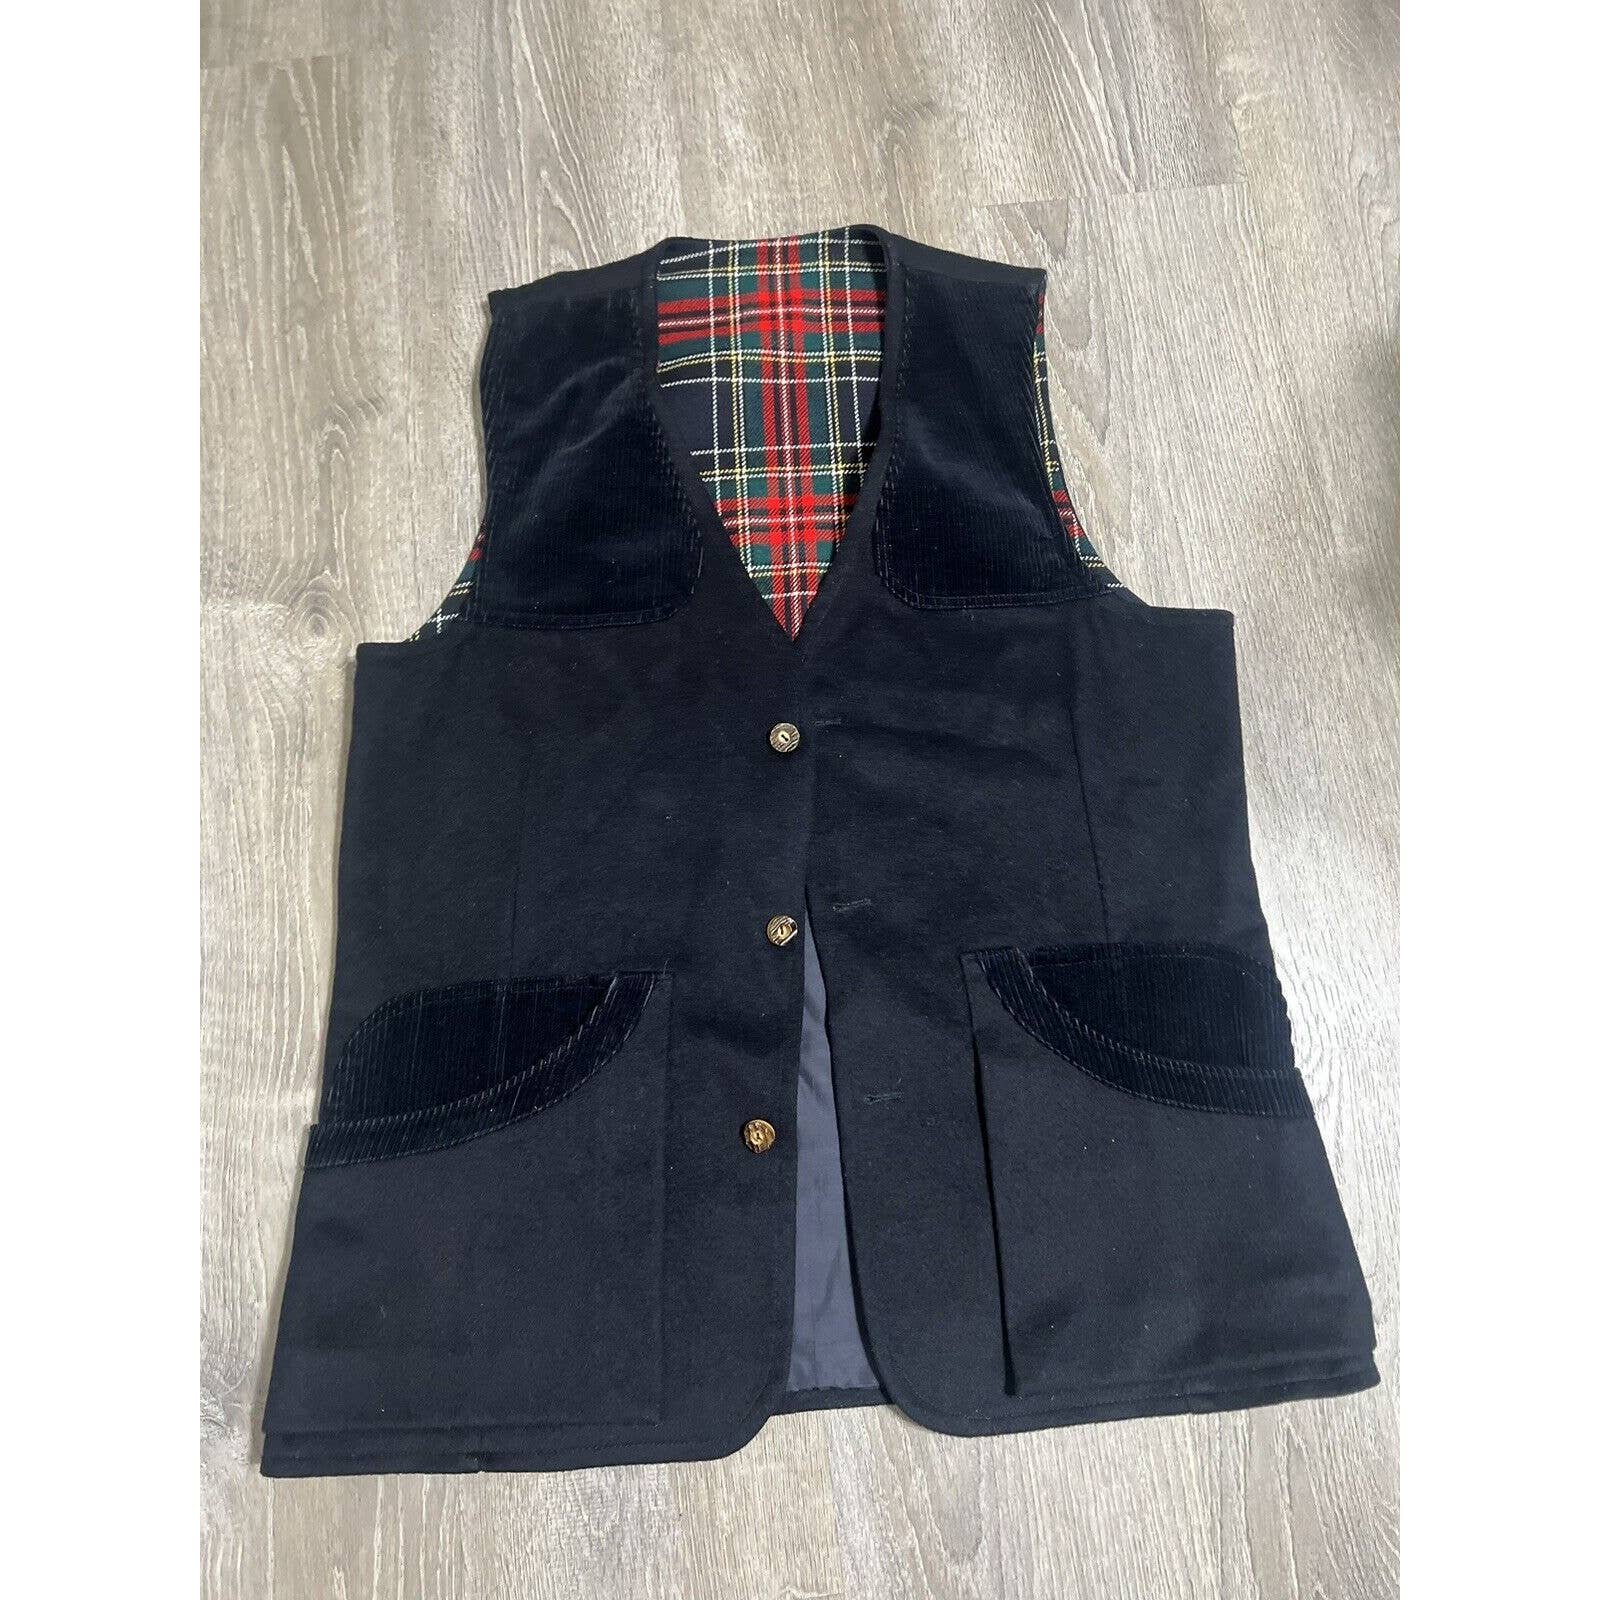 Hucclecote Wool Blend Men’s Black Shooting Suit Waistcoat, Tailored Size 36 UK rXSeSvcCl